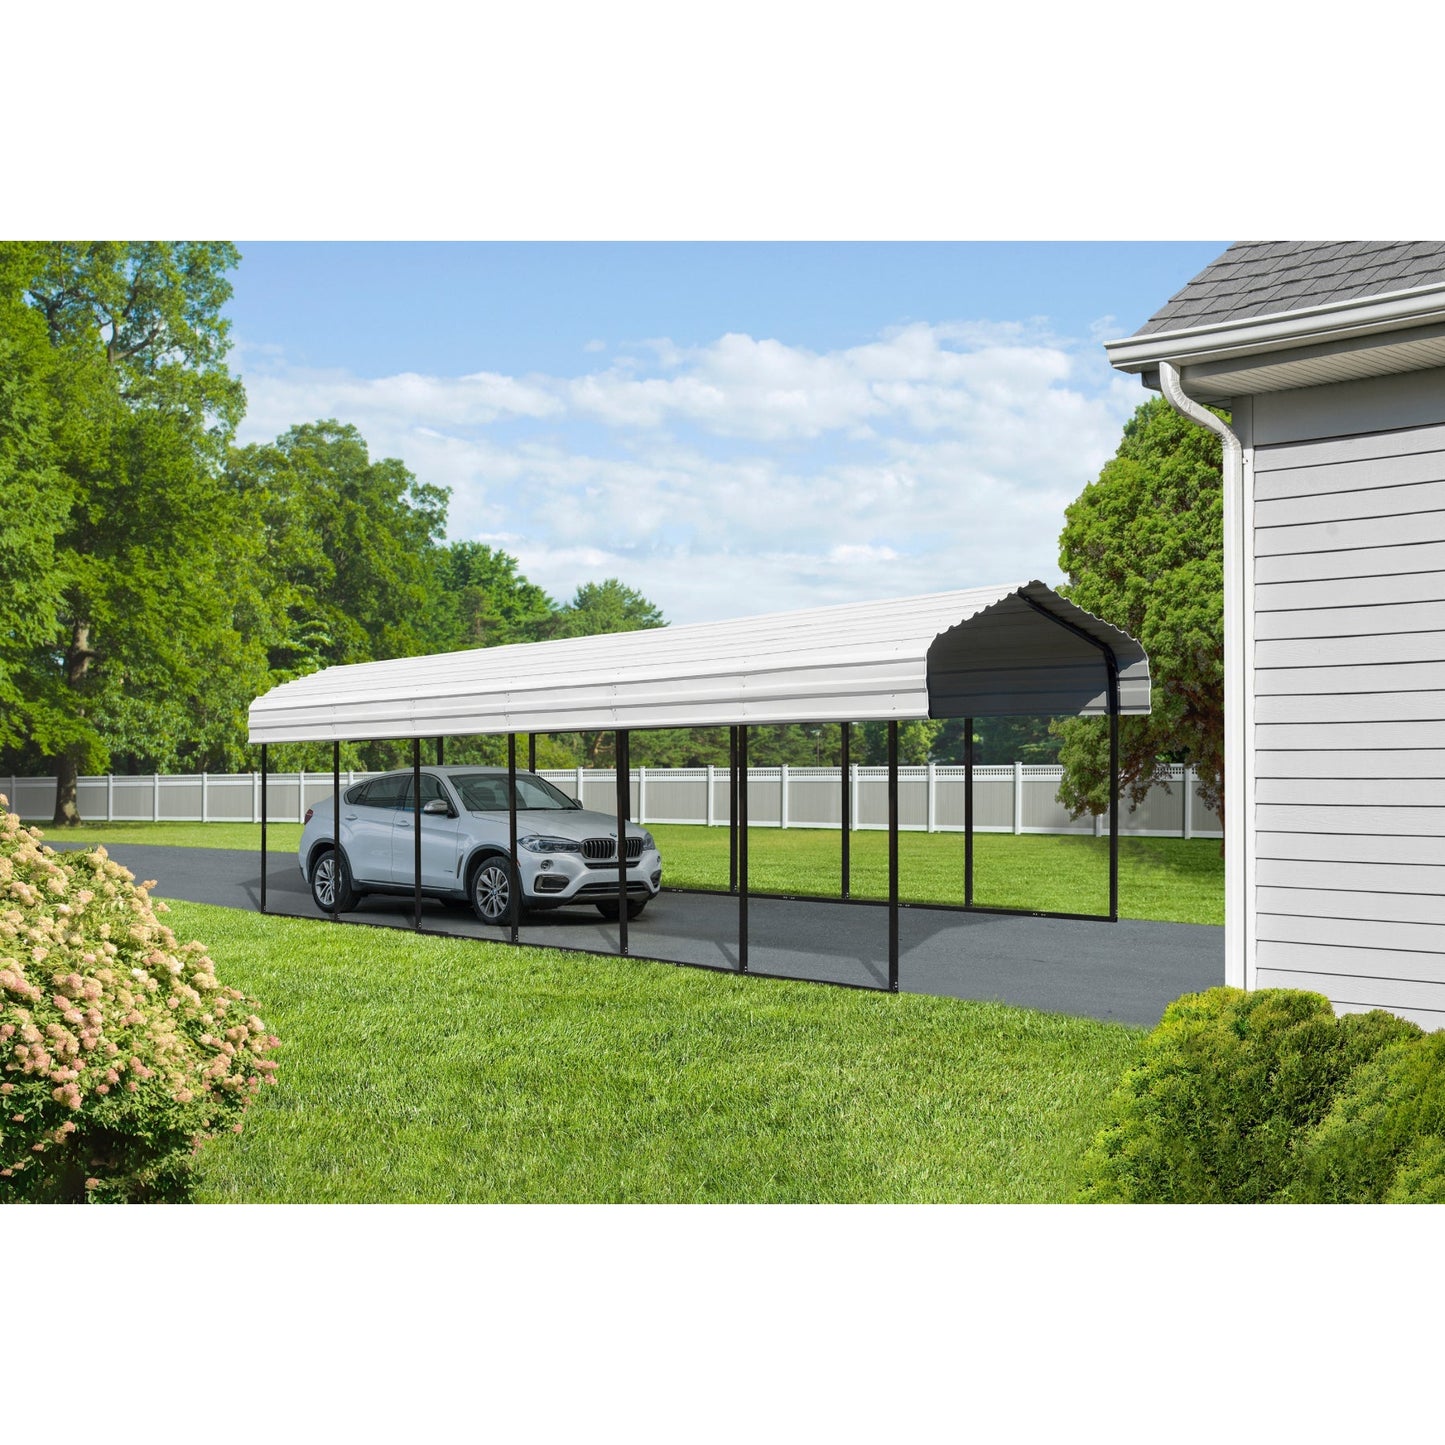 Arrow Steel Carport Canopy 12 x 29 x 9 ft.-Delightful Yard